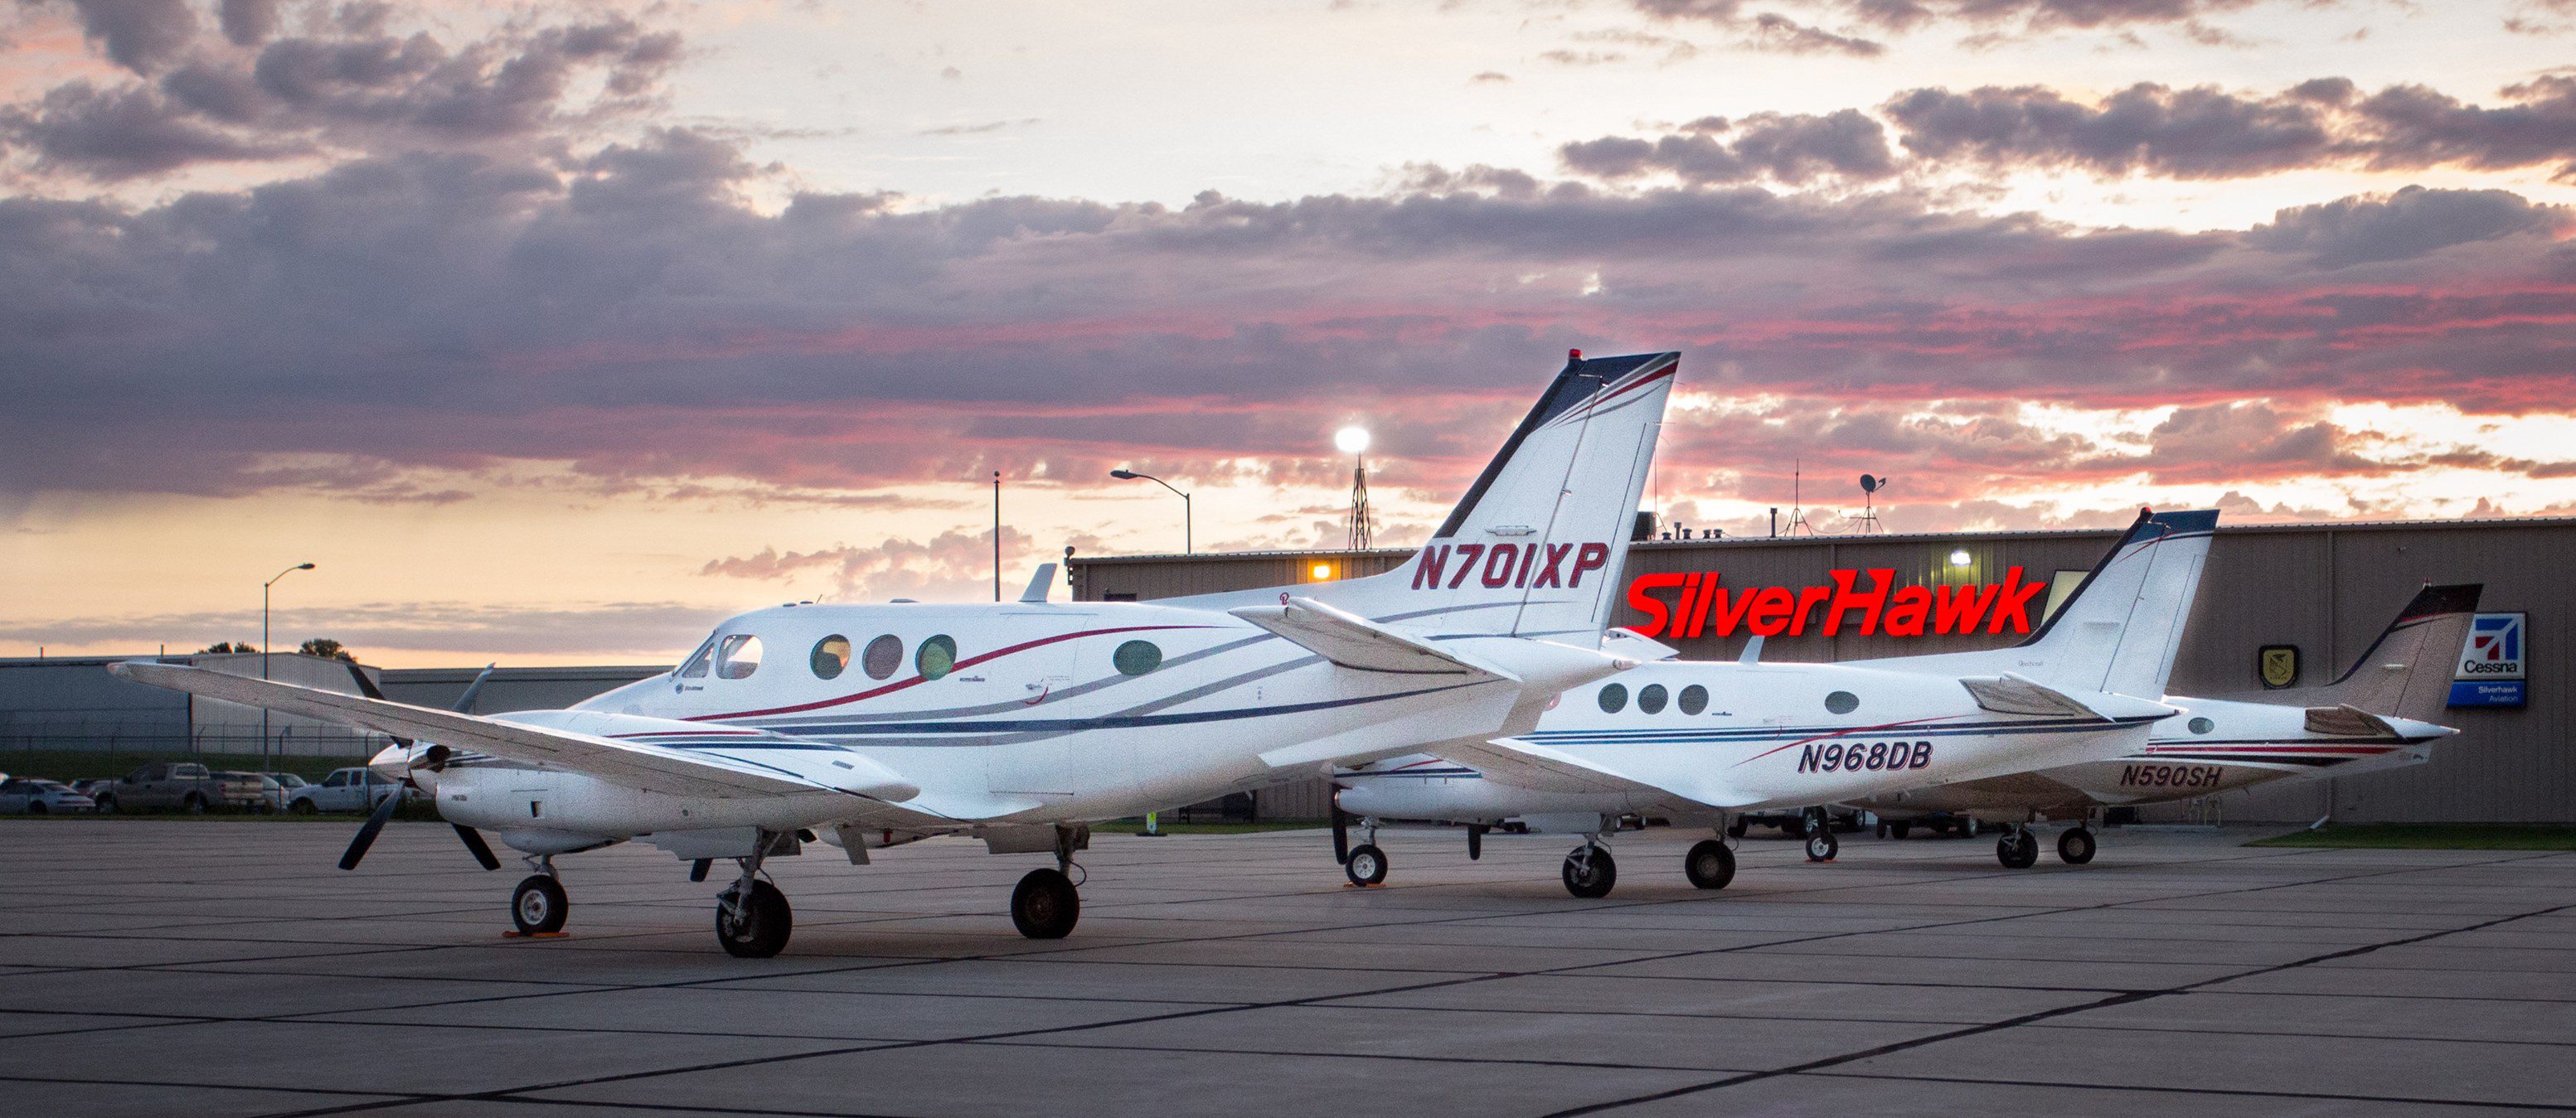 Silverhawk Aviation at Lincoln Airport (KLNK) in Lincoln, NE